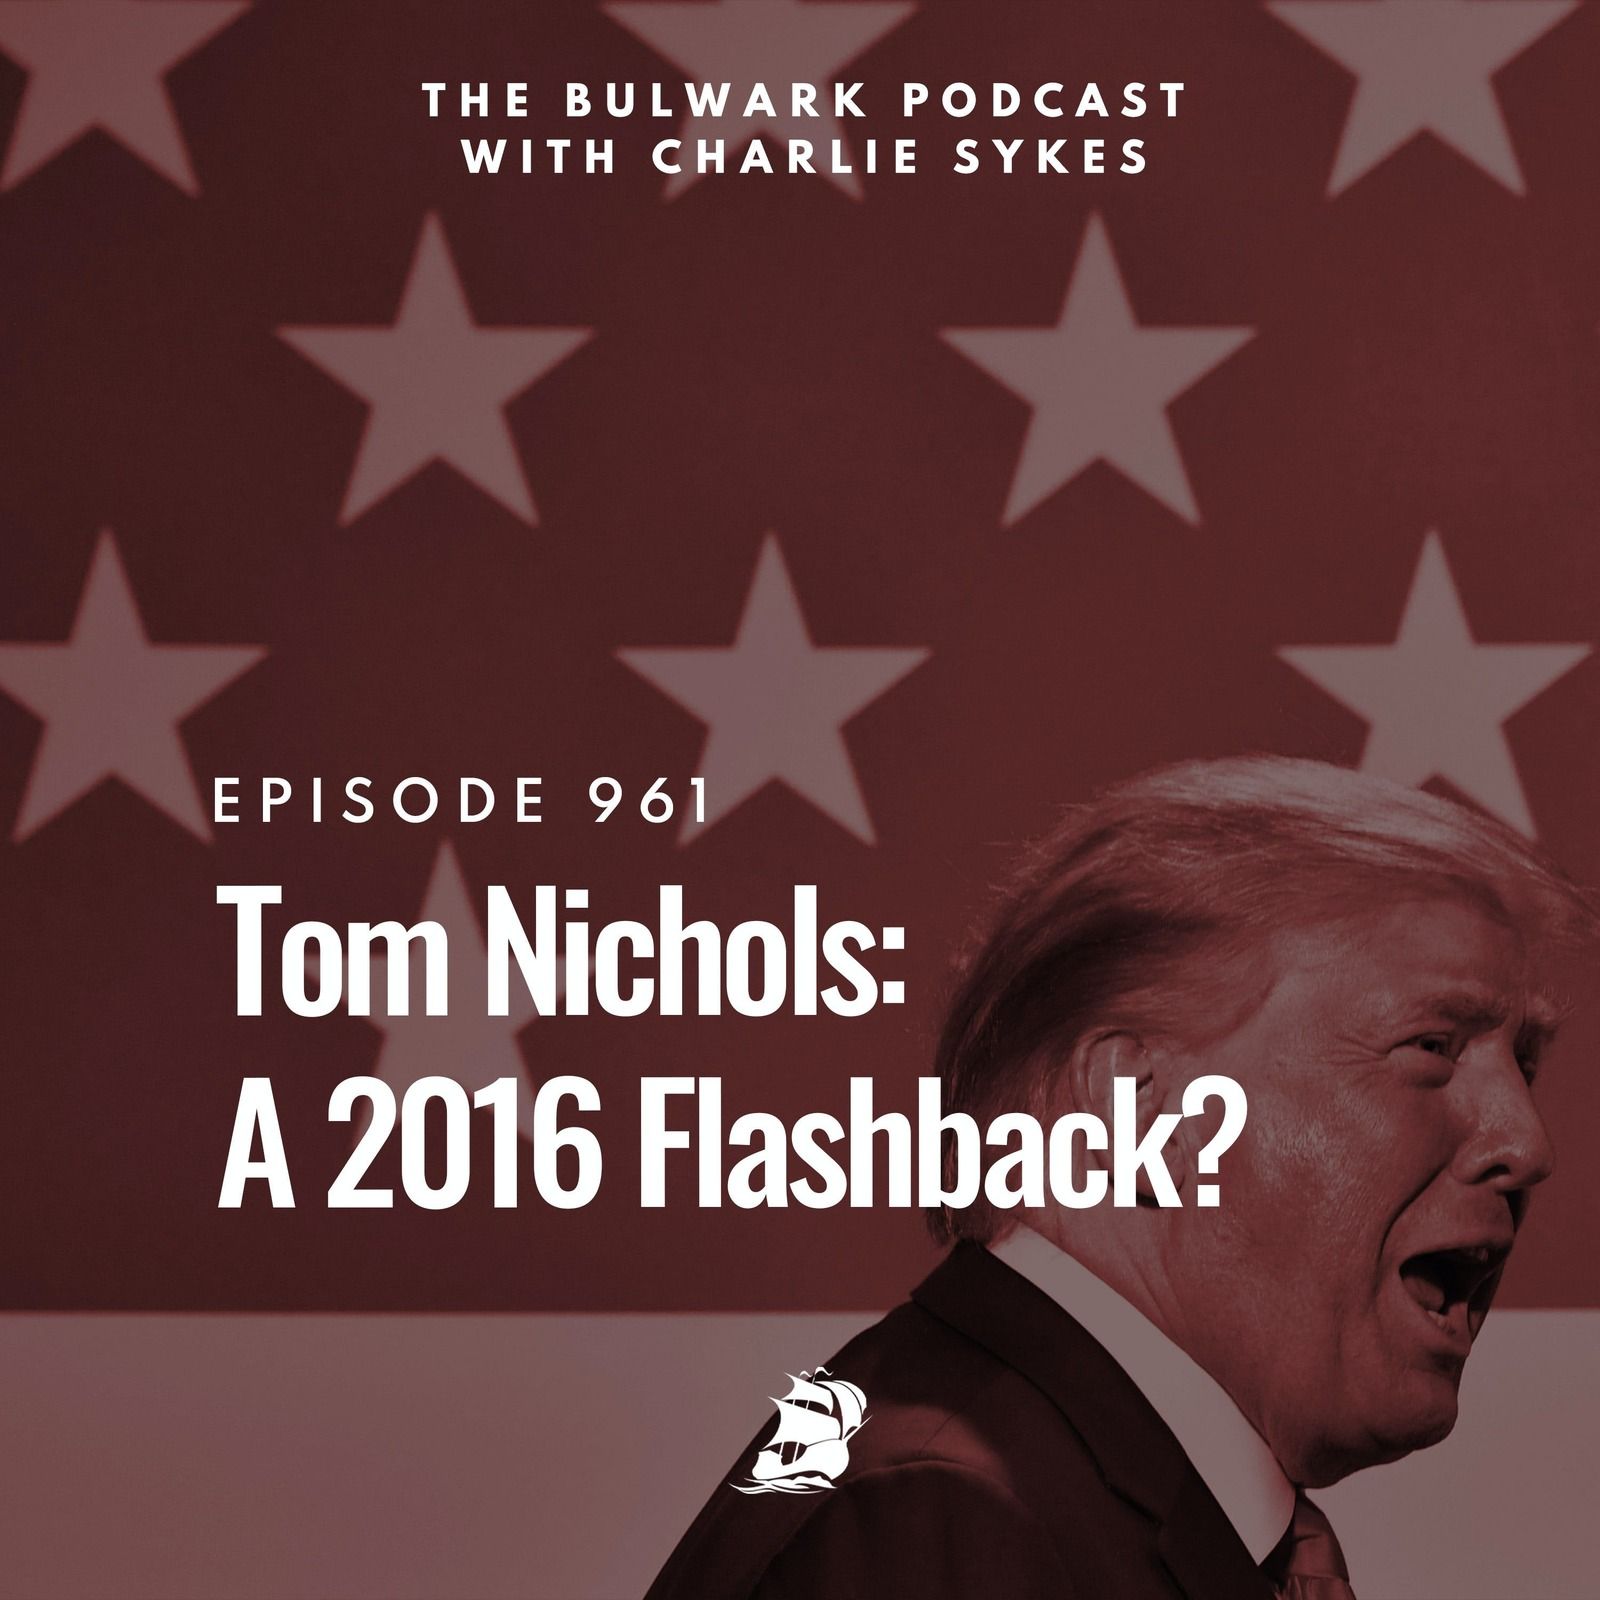 Tom Nichols: A 2016 Flashback? by The Bulwark Podcast